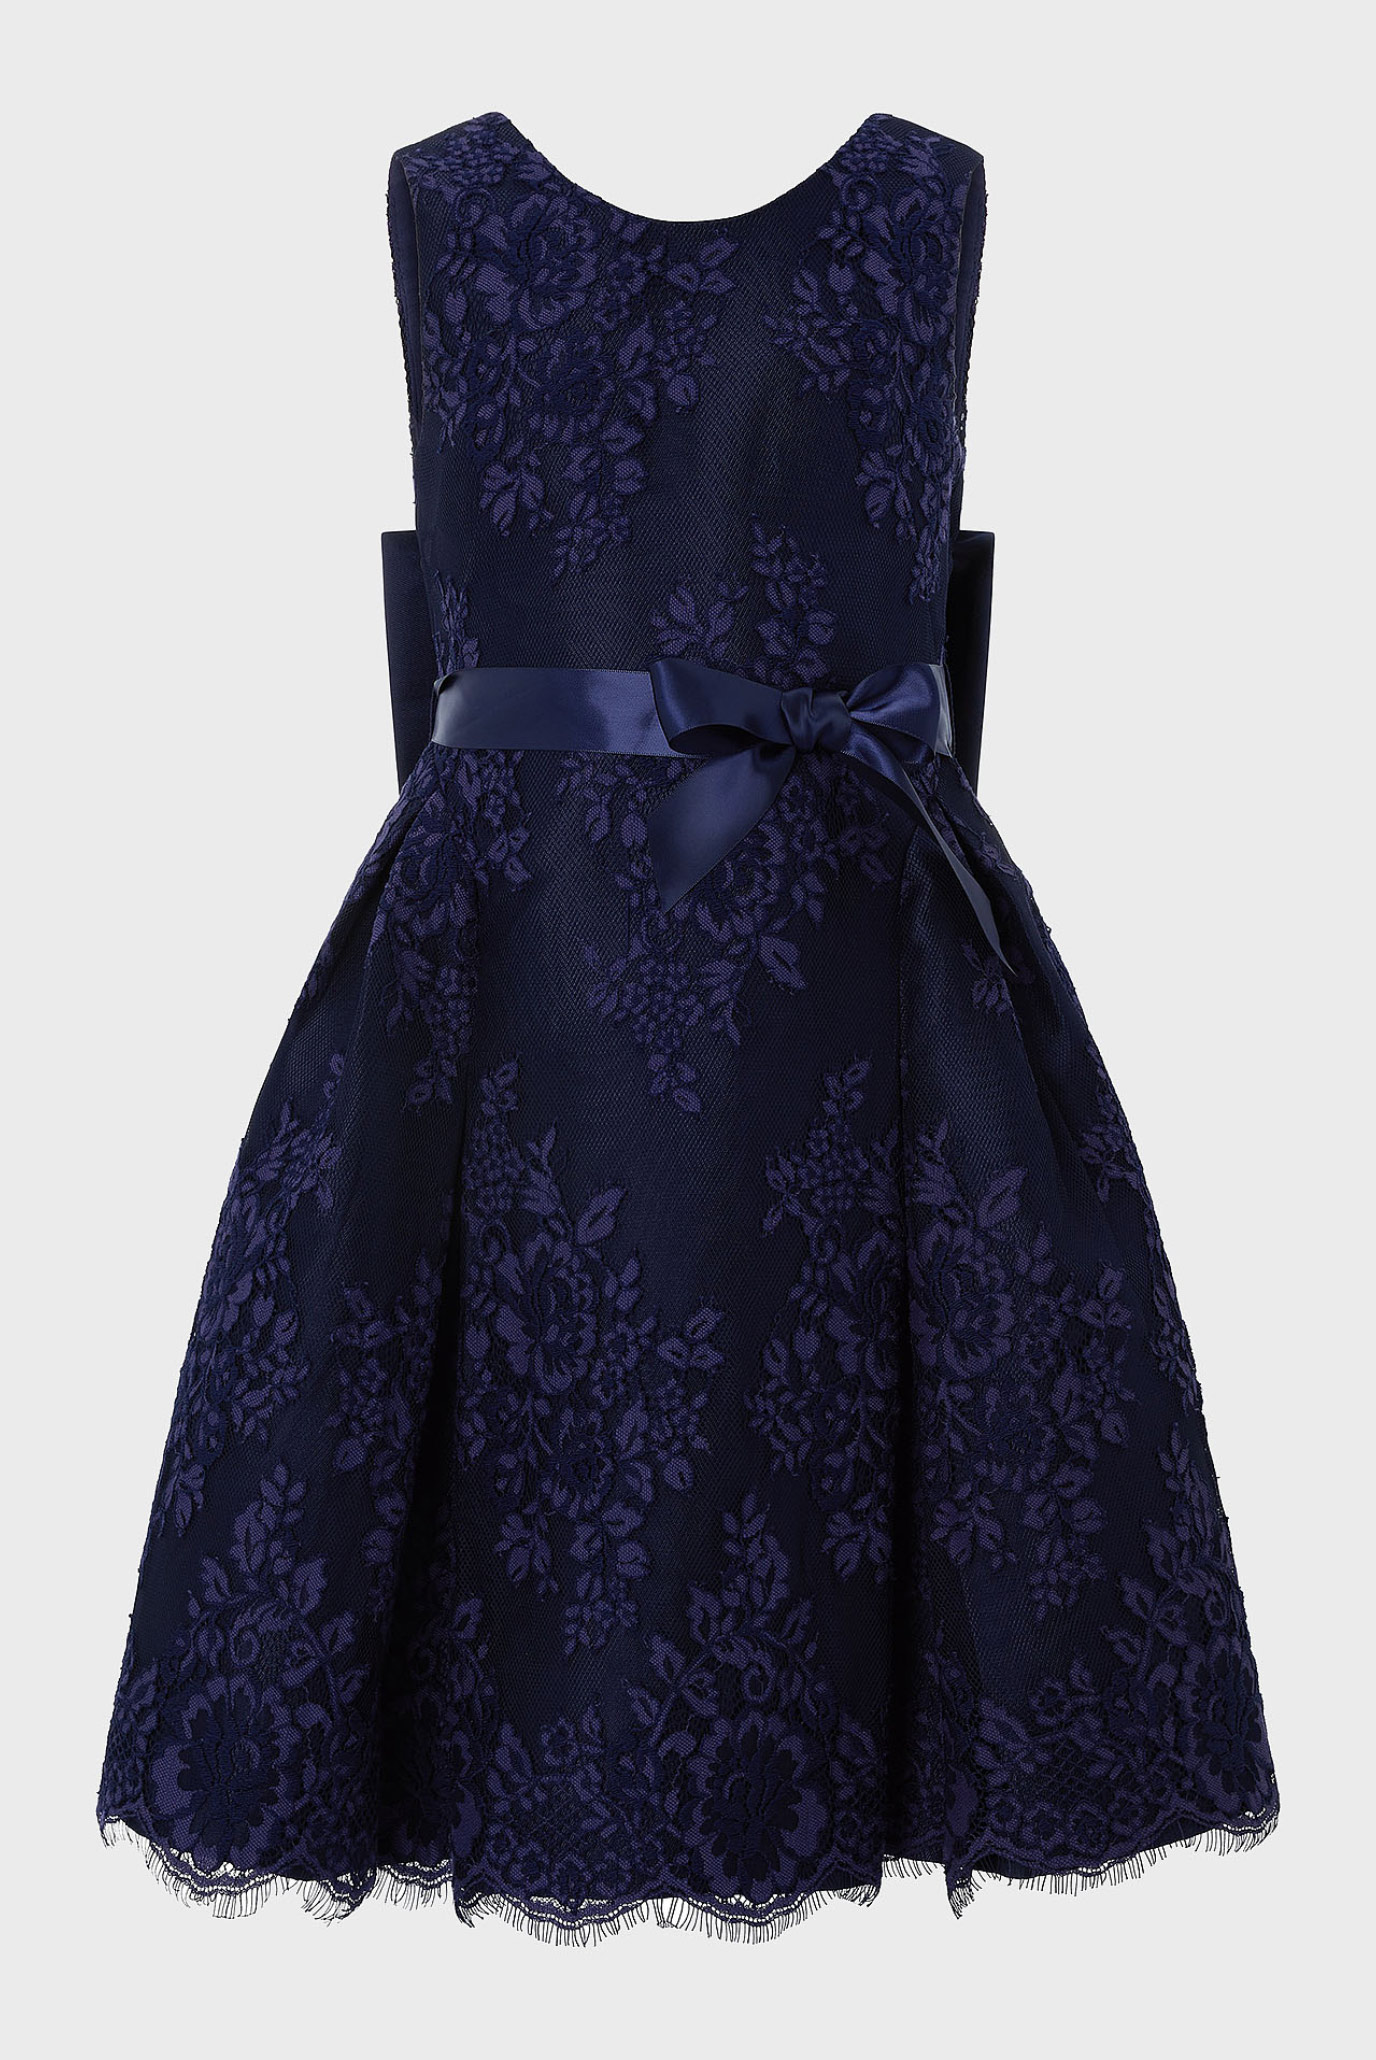 Дитяча темно-синя сукня Valeria 1